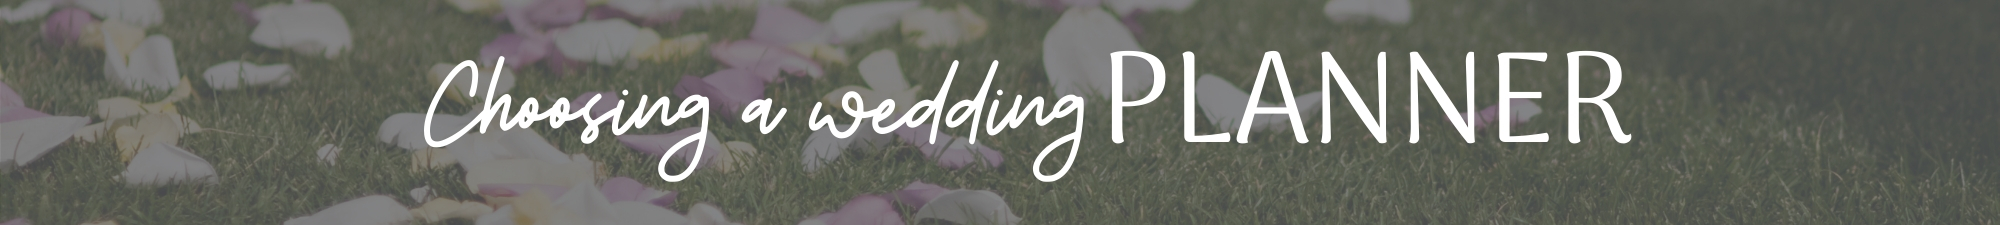 Choosing a wedding planner